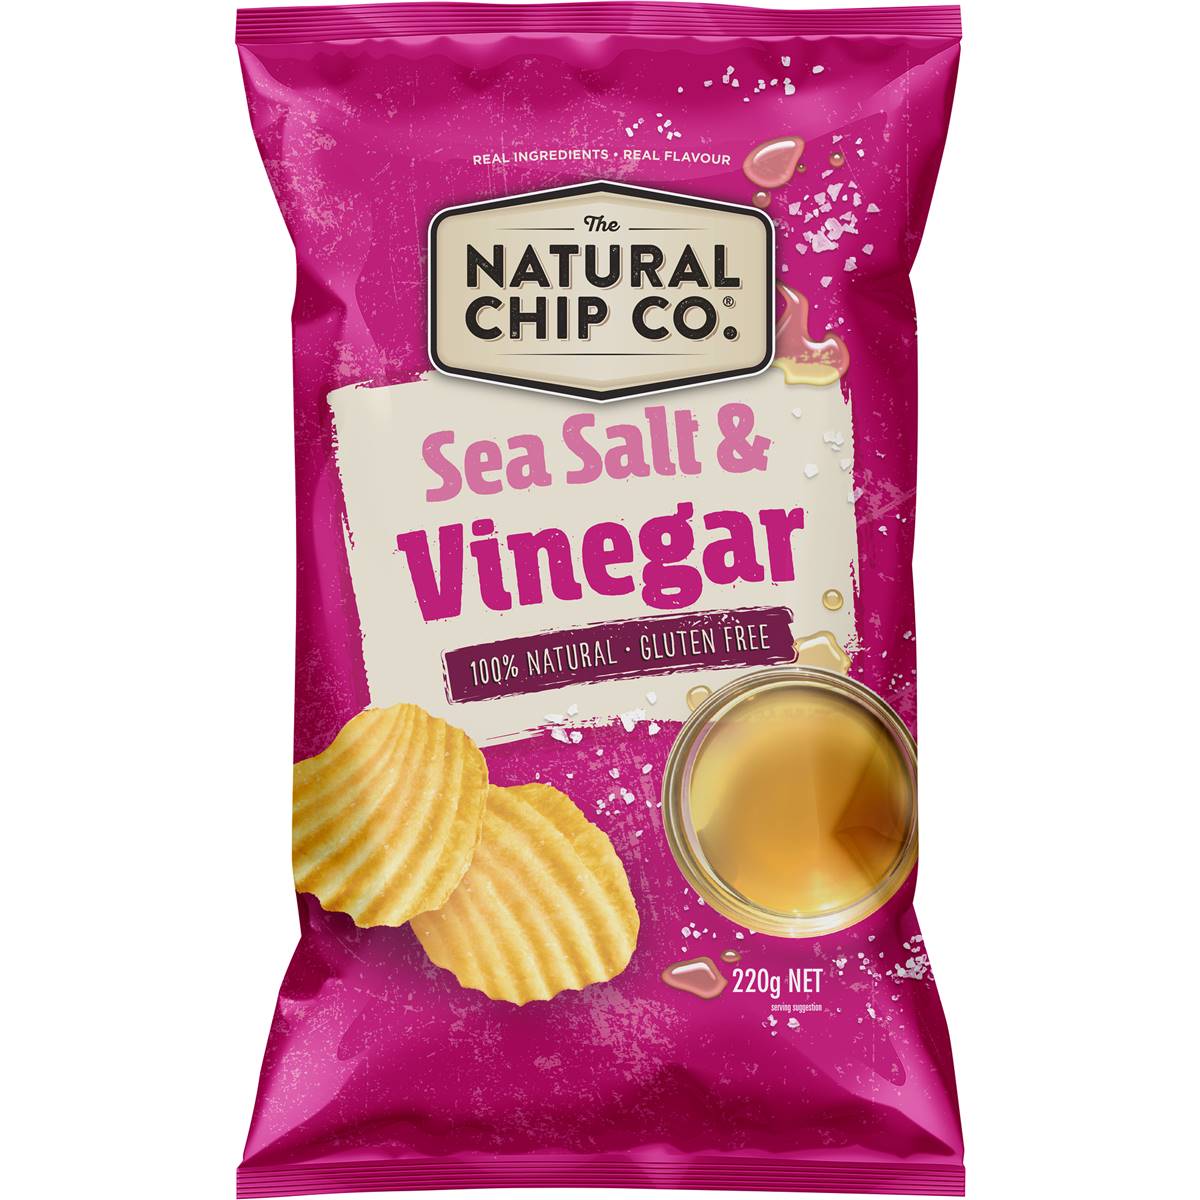 Calories in The Natural Chip Co. Salt & Vinegar